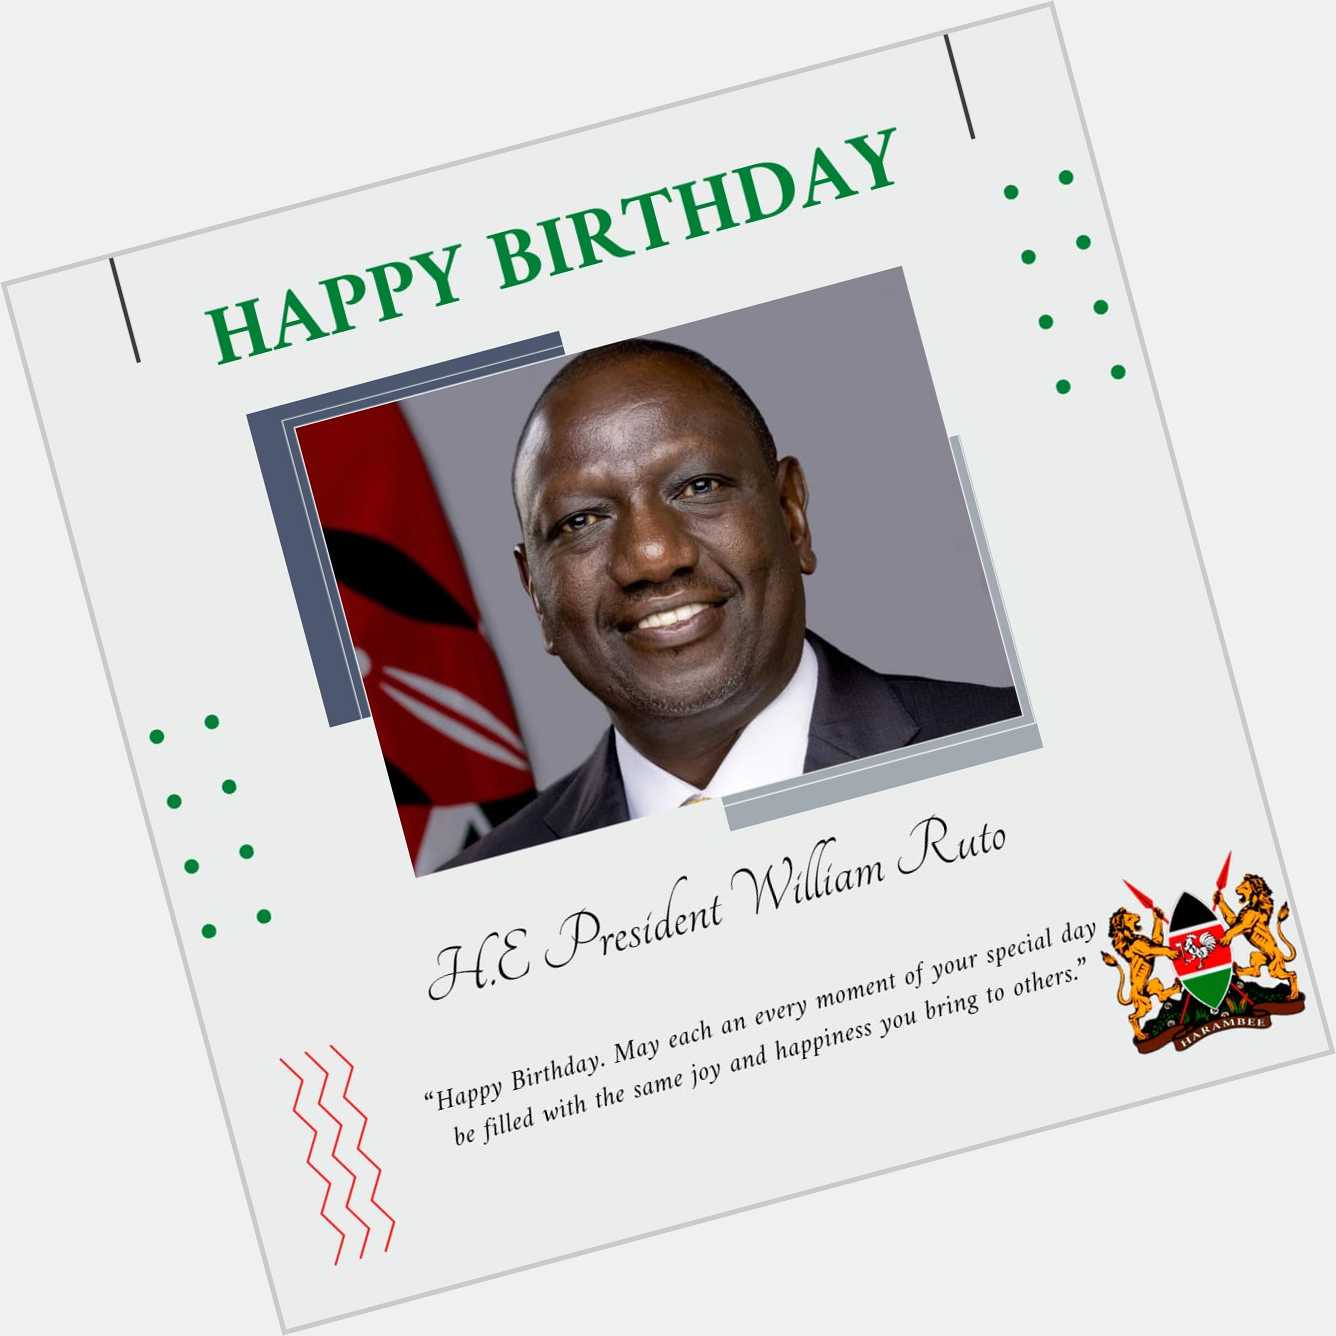 Happy birthday my boss the president of Republic of Kenya his HE William Ruto 